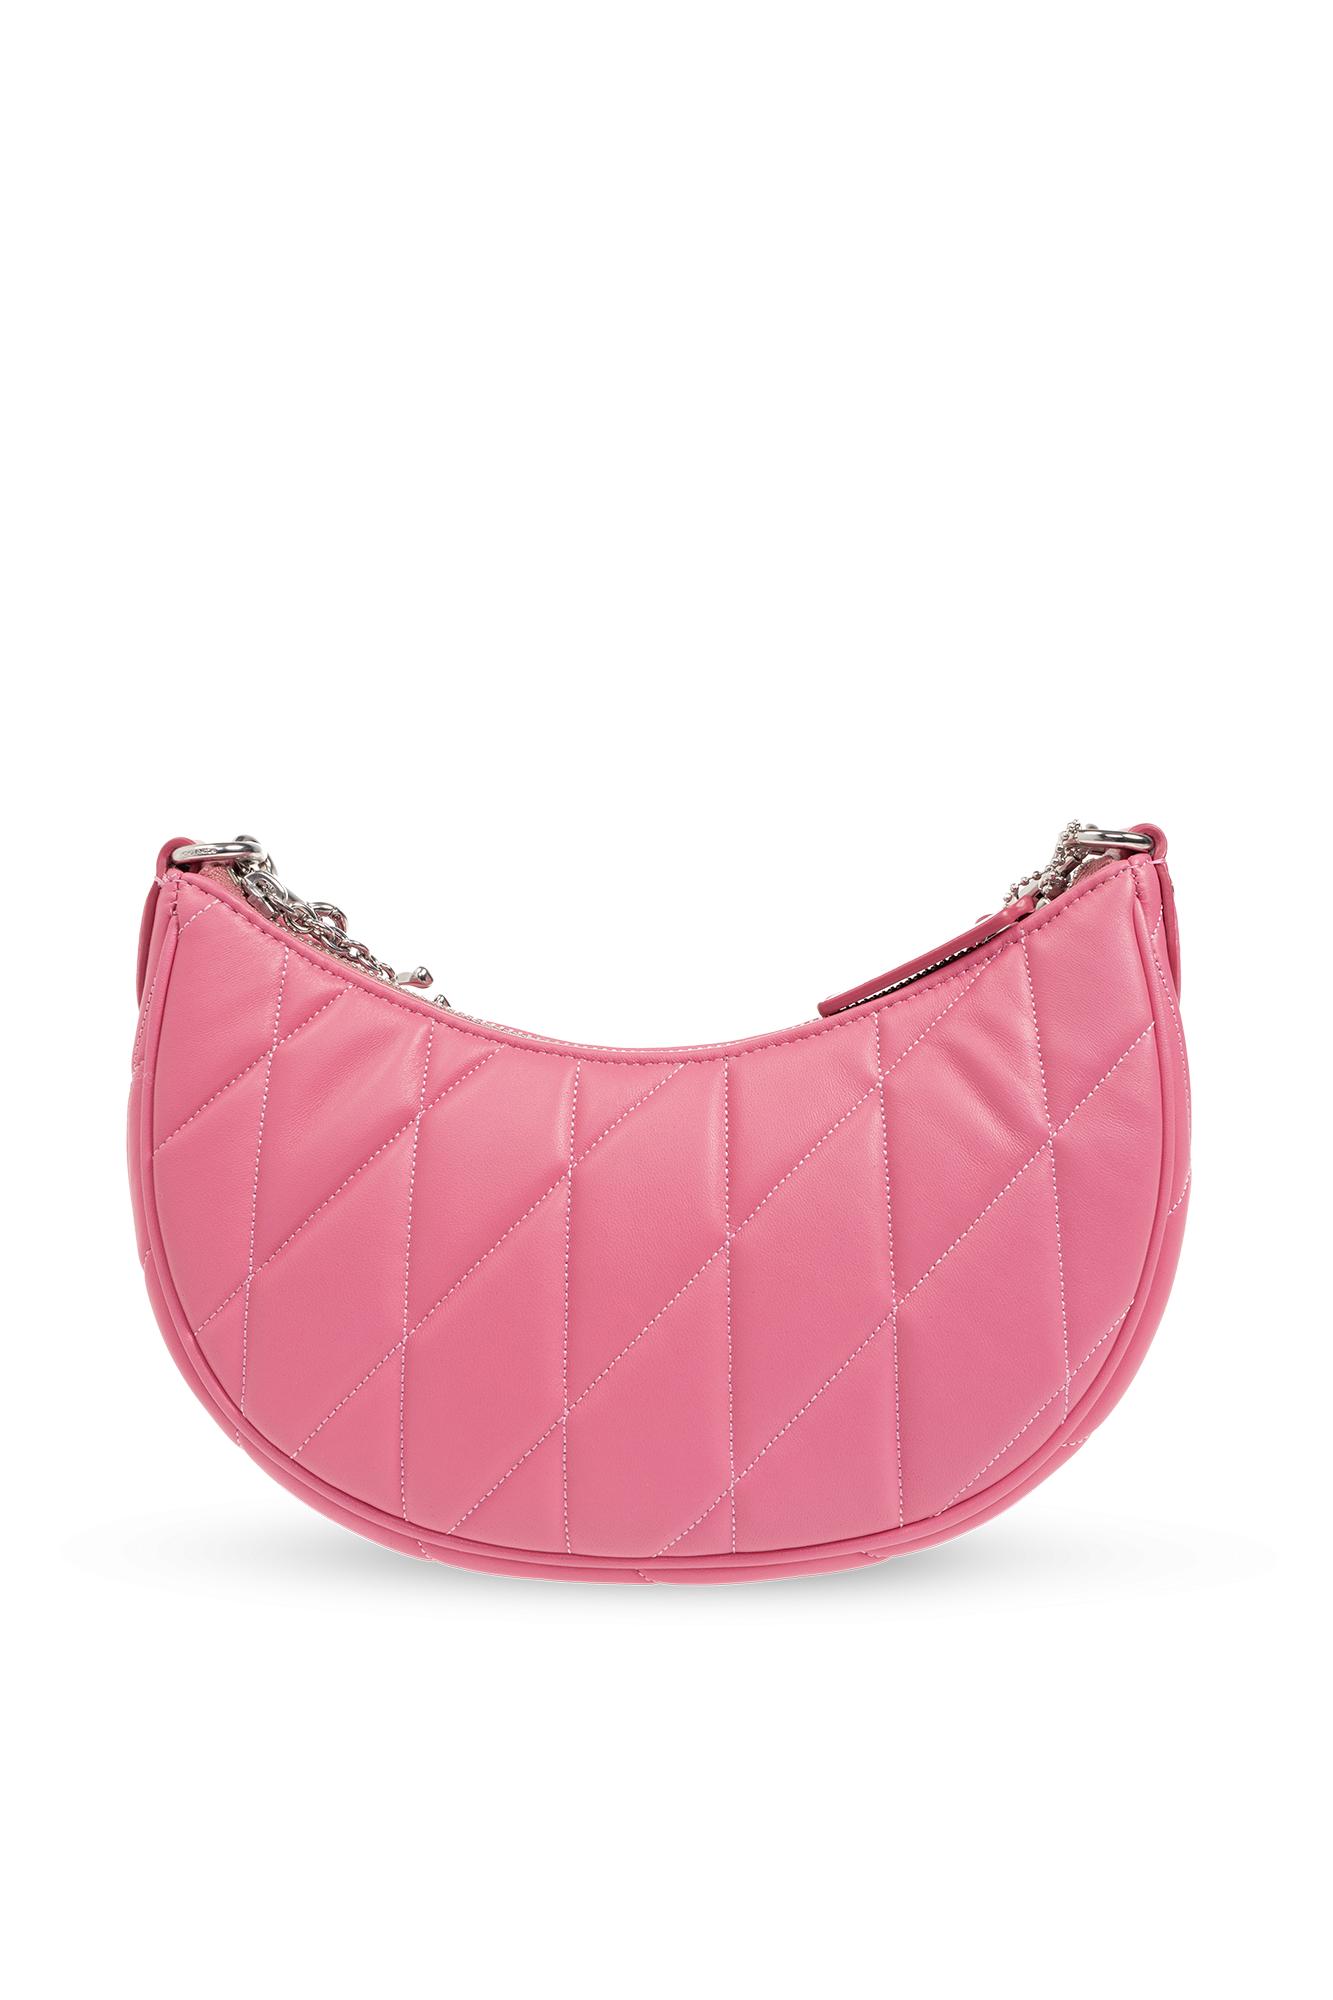 COACH 'mira' Shoulder Bag in Pink